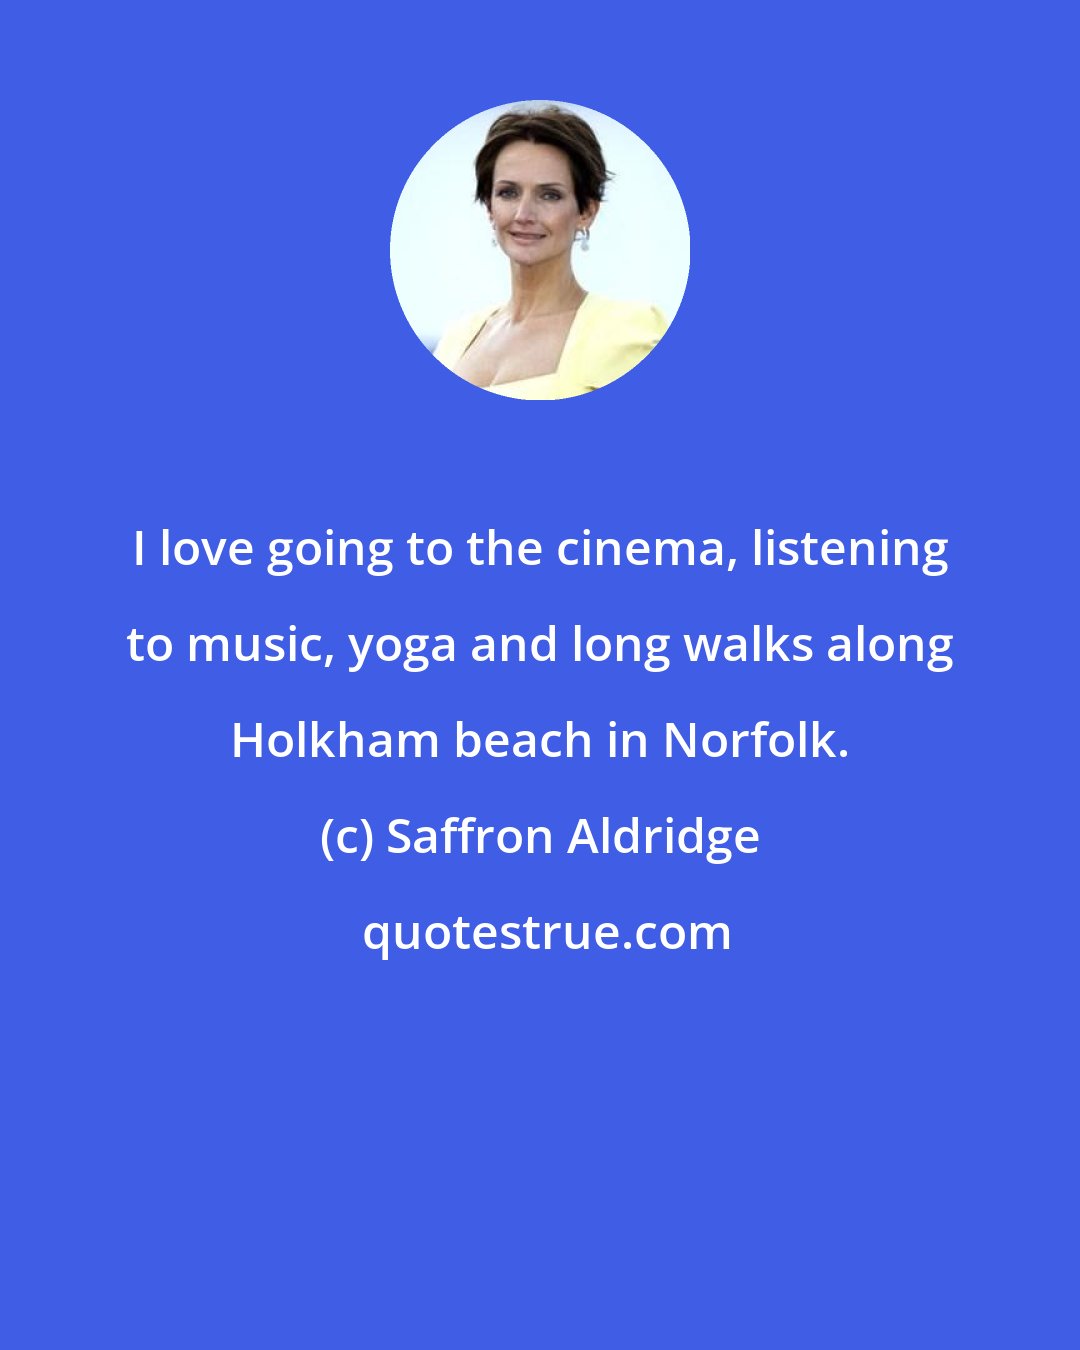 Saffron Aldridge: I love going to the cinema, listening to music, yoga and long walks along Holkham beach in Norfolk.